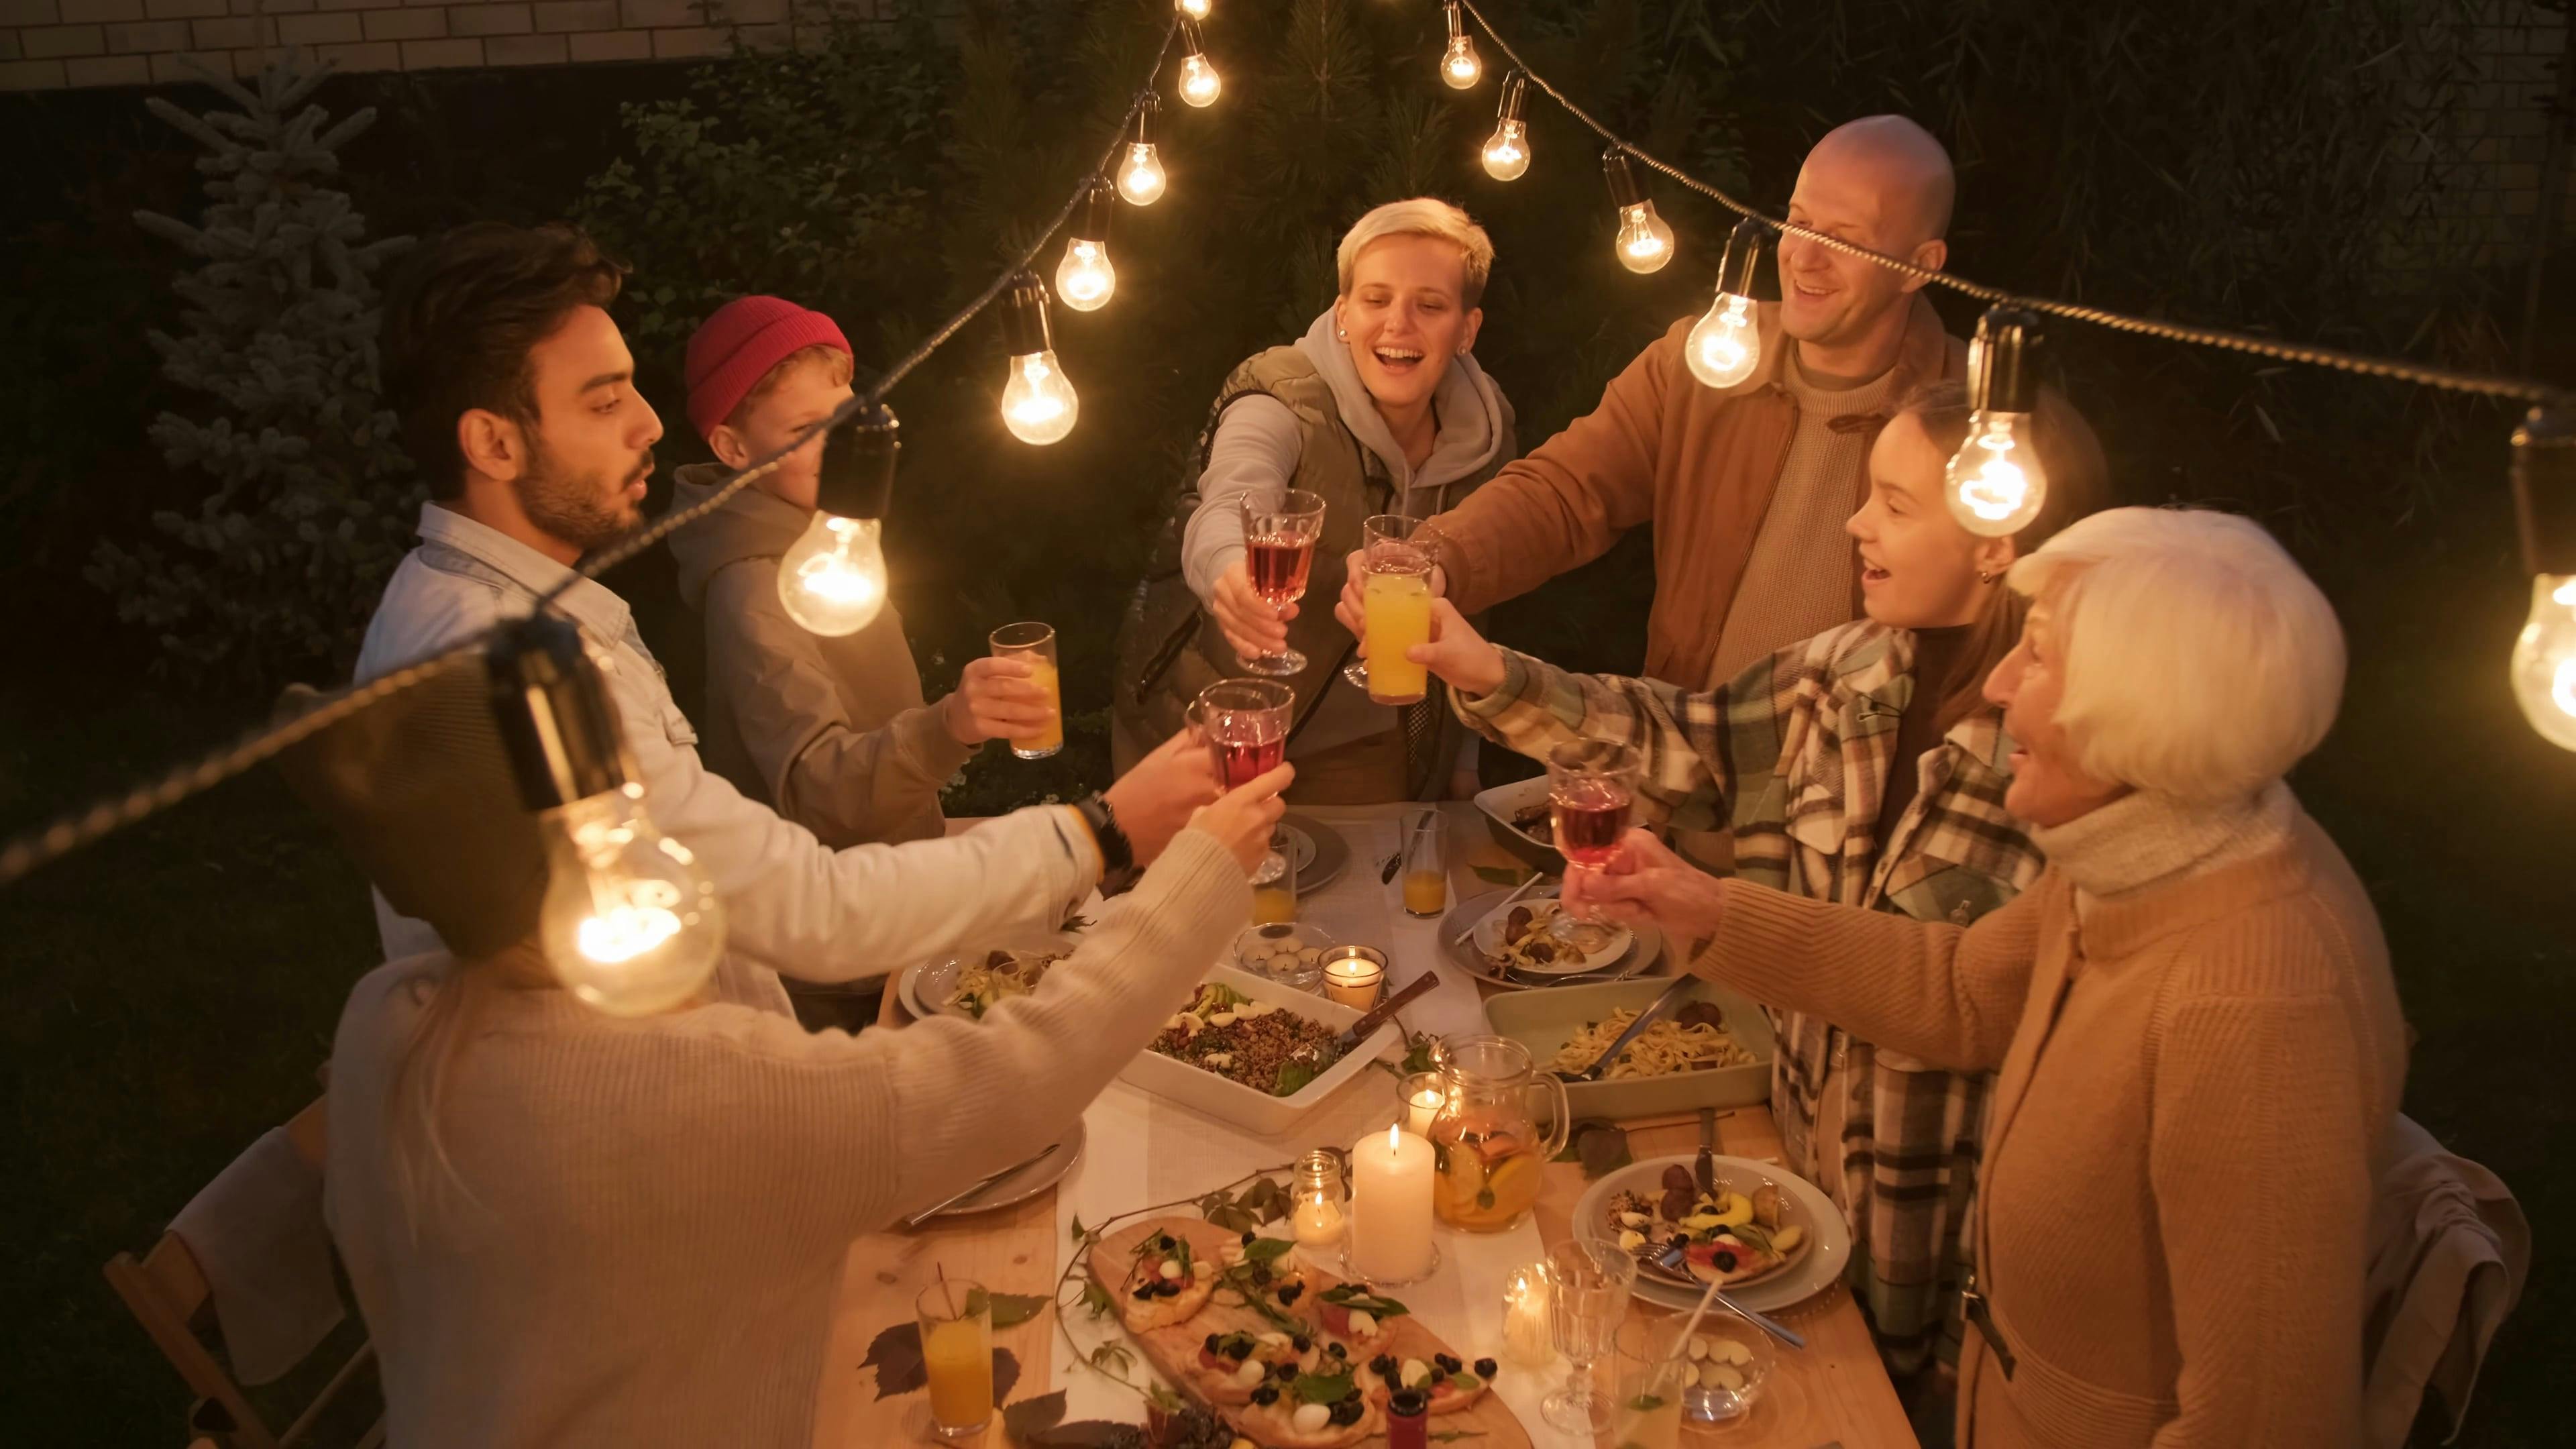 Joyful Family Toasting Drinks on Family Gathering · Free Stock Video